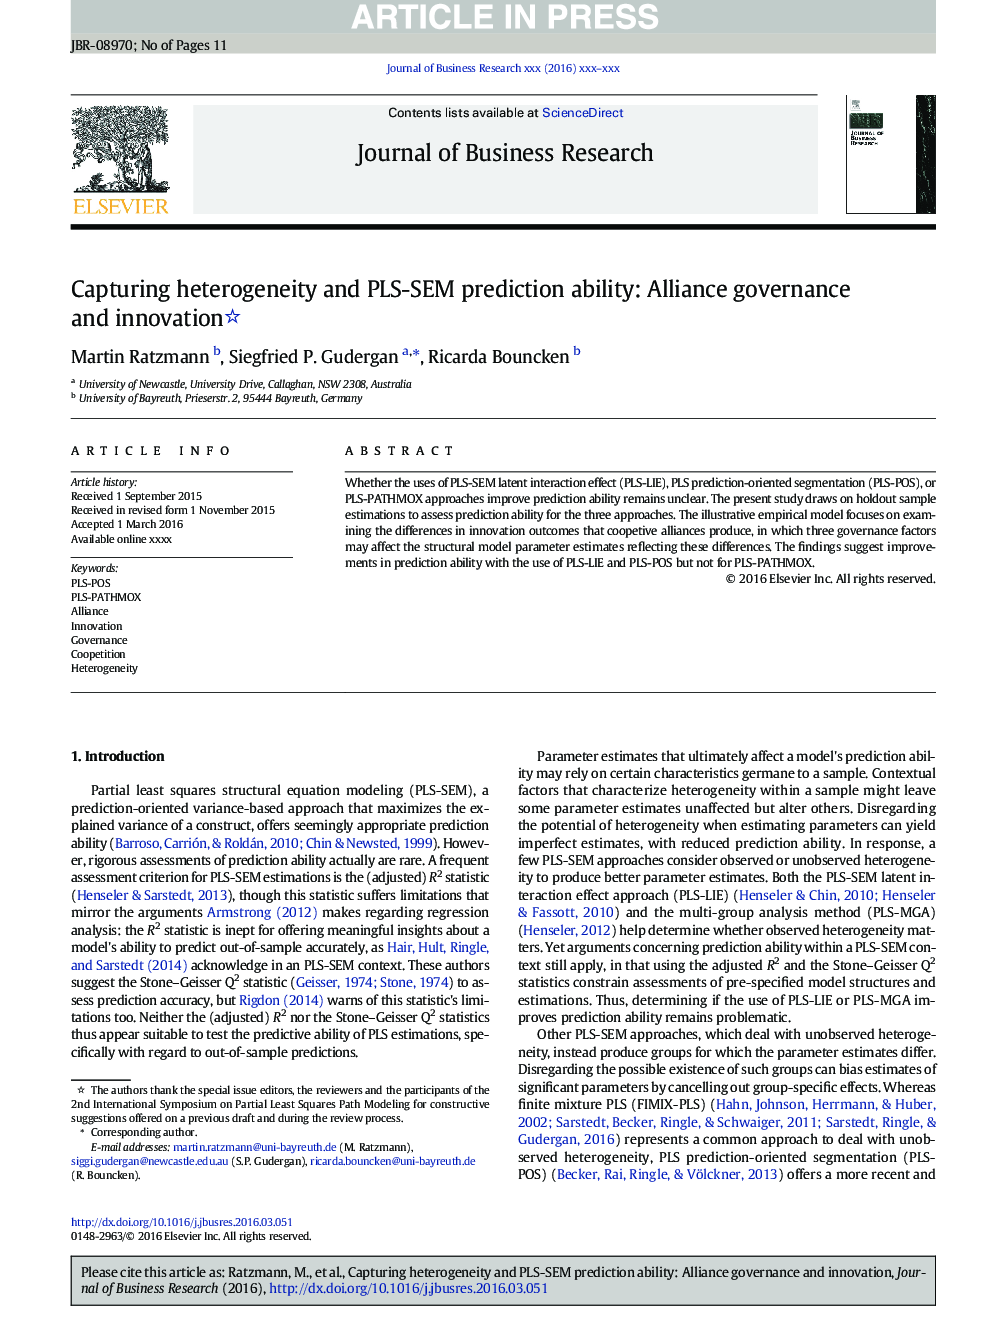 Capturing heterogeneity and PLS-SEM prediction ability: Alliance governance and innovation